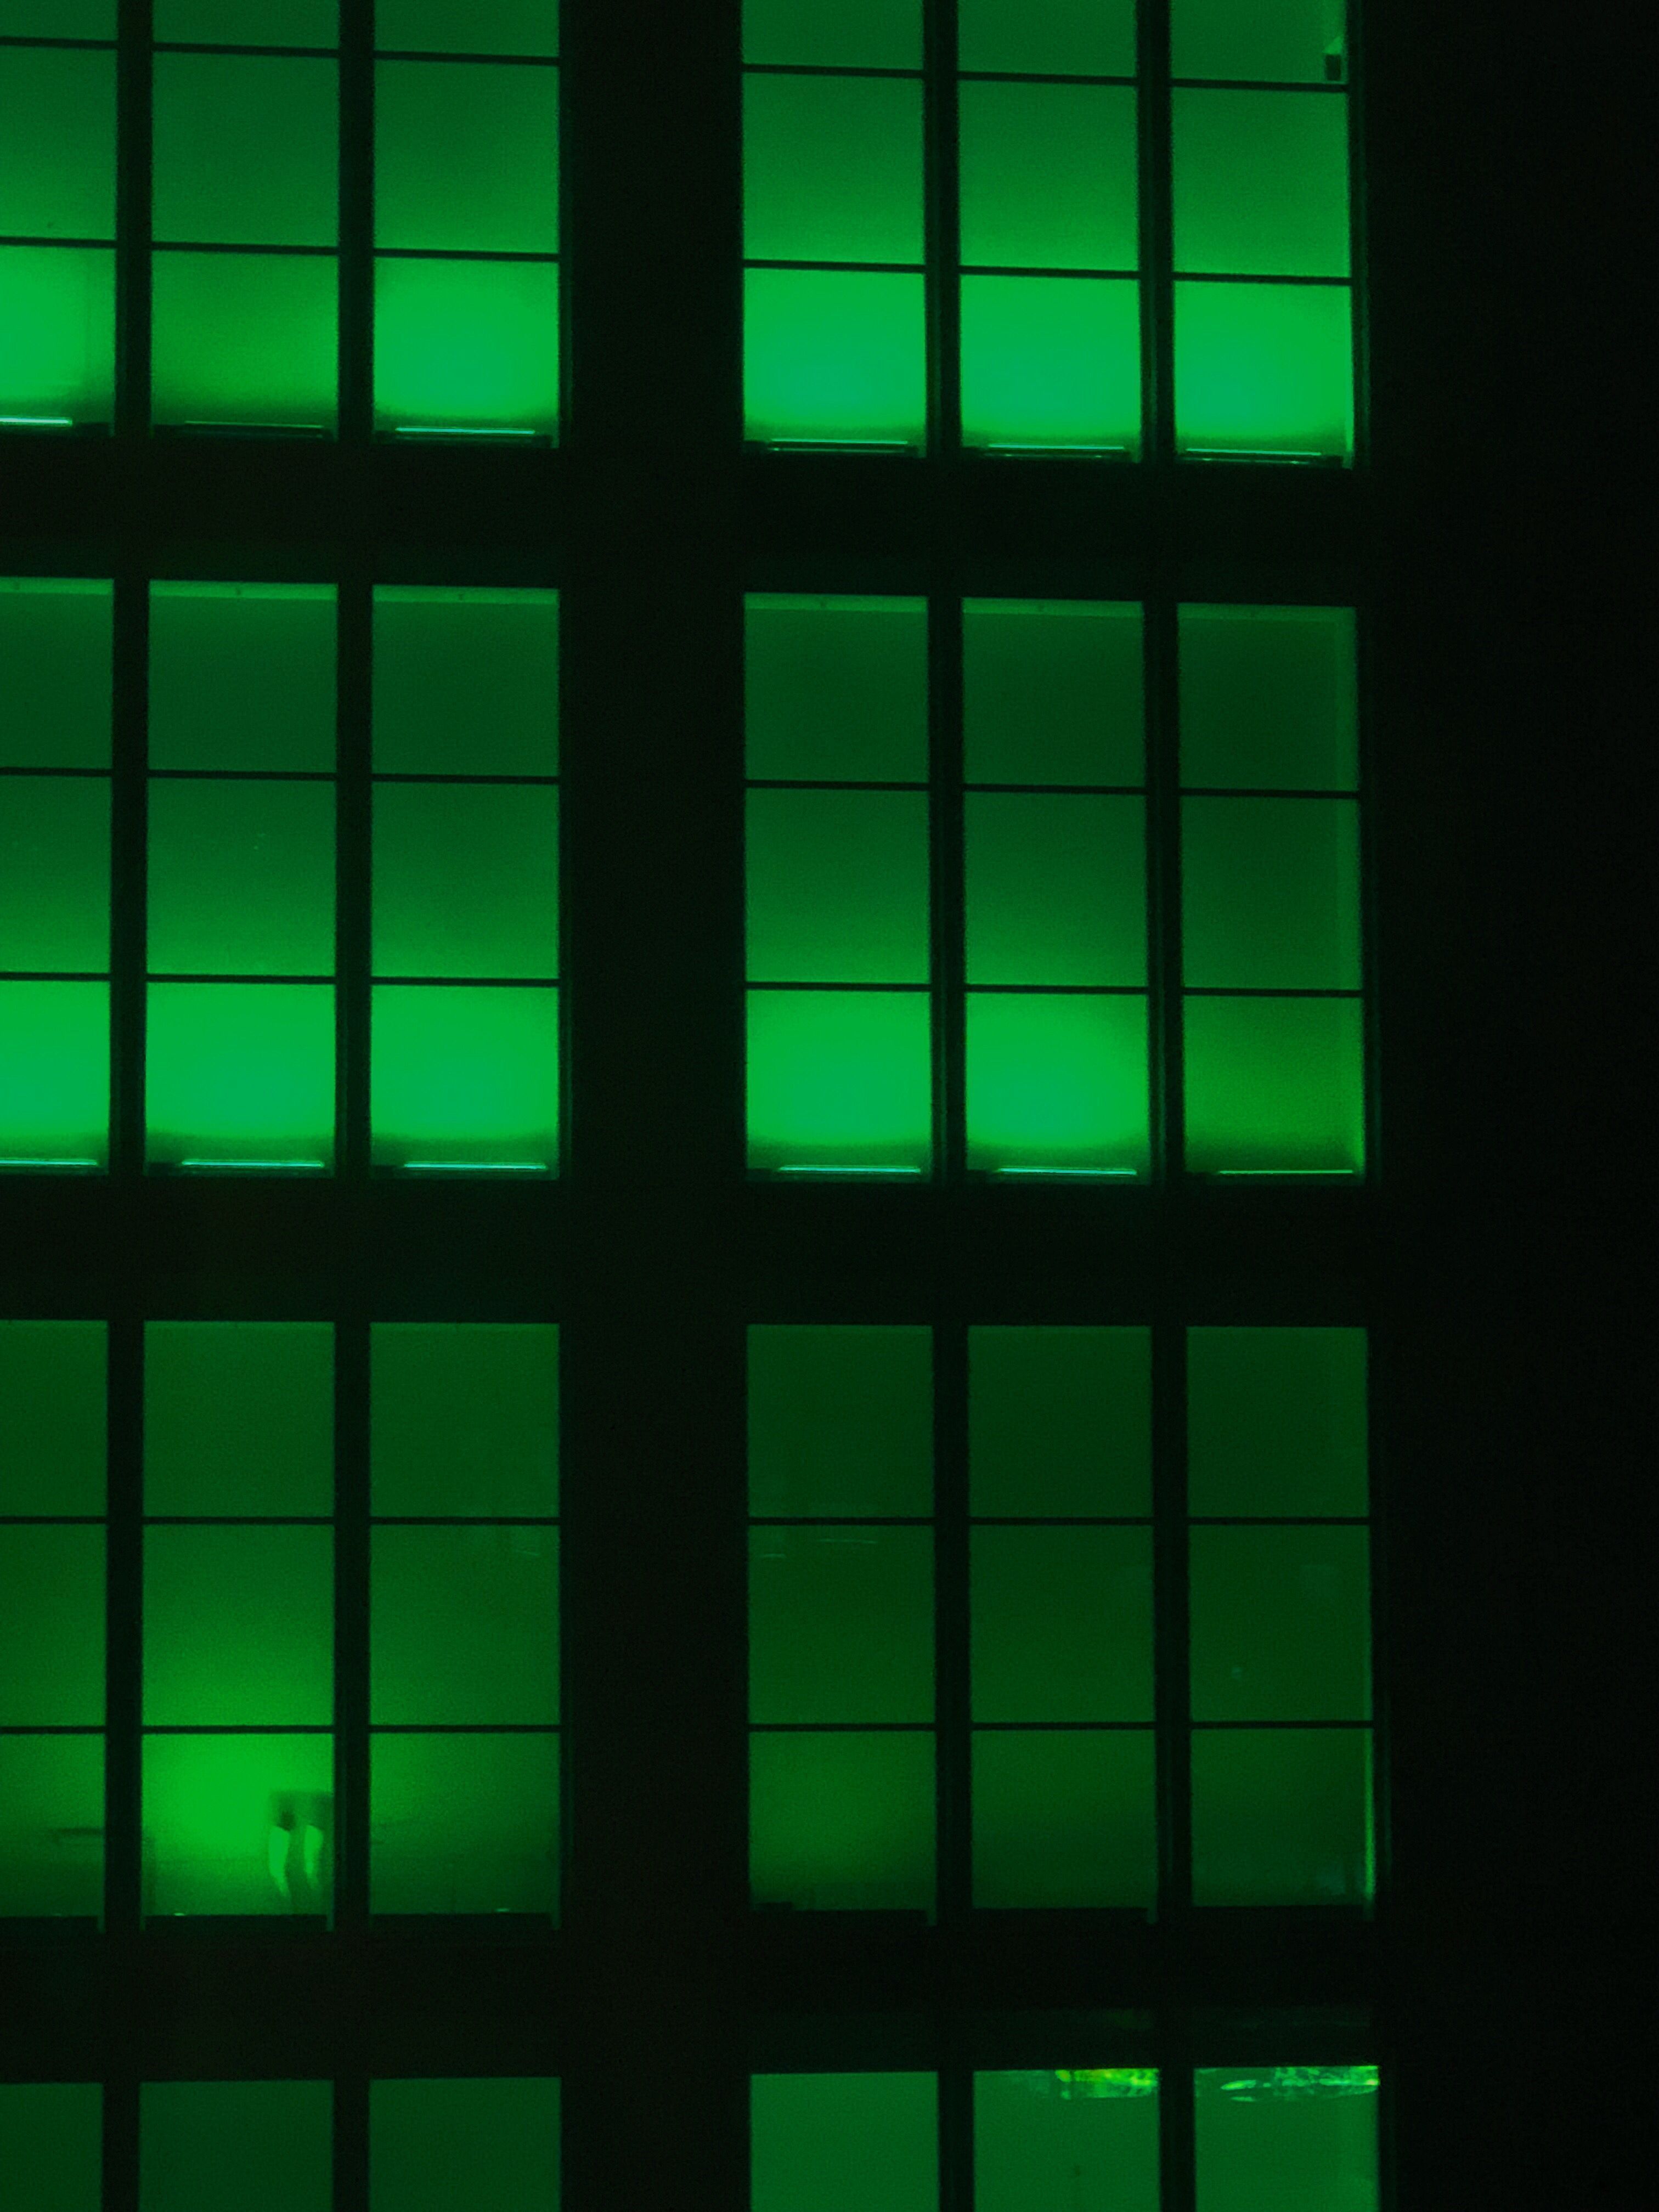 A green neon light shines through a wall of windows. - Neon green, lime green